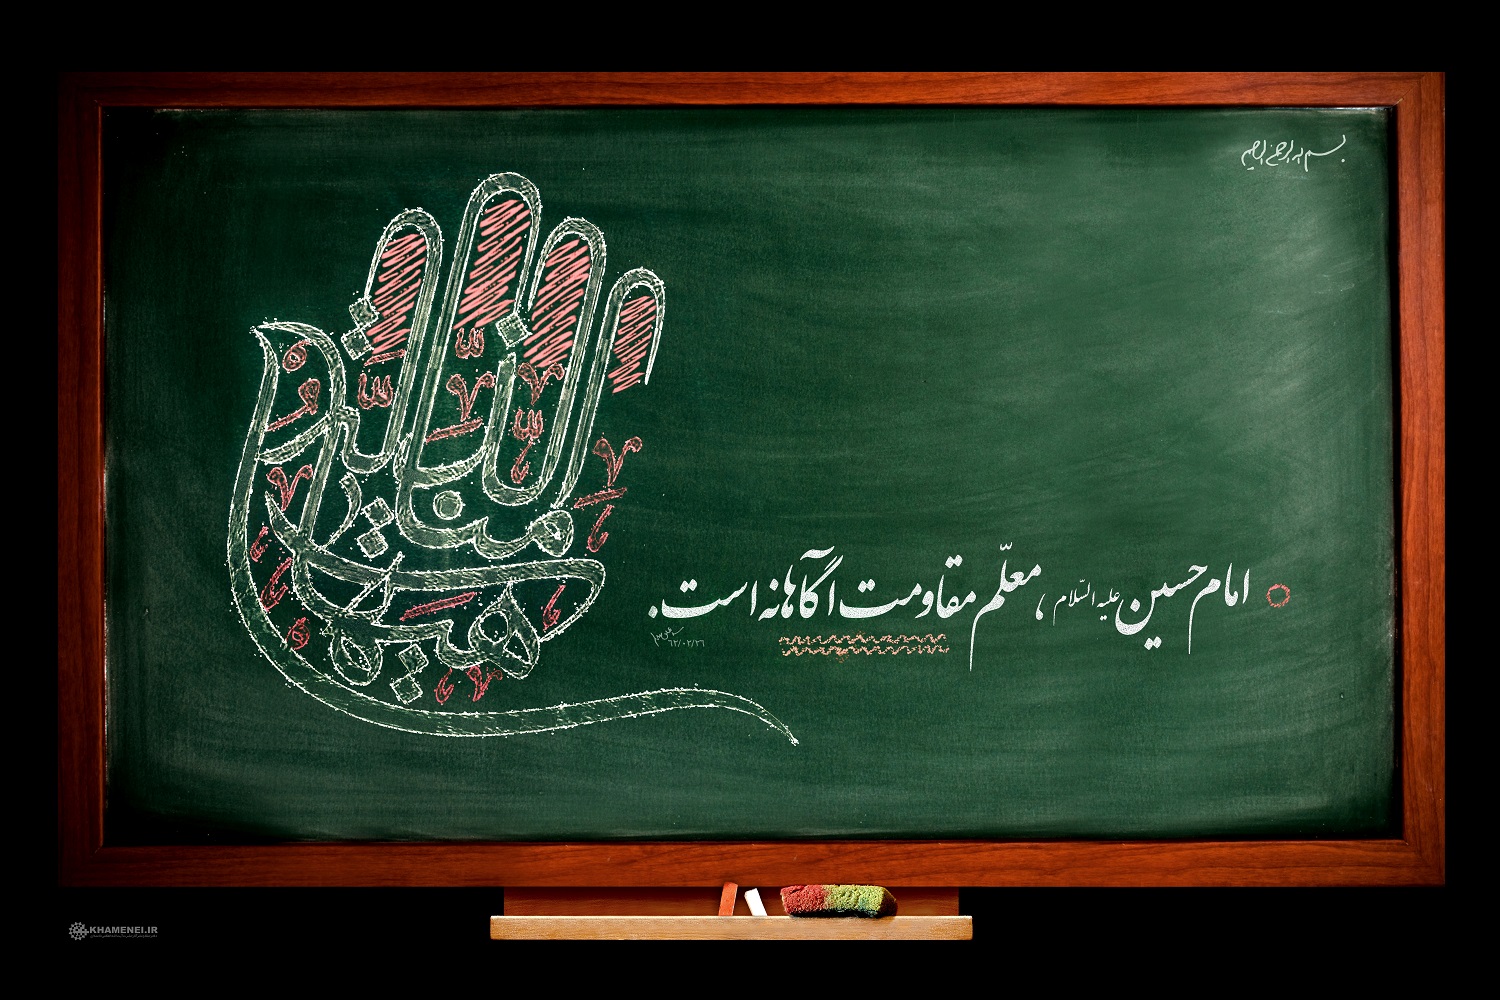 پوستر بیانات مقام معظم رهبری: "معلم مقاومت" راه حسین علیه‌السلام"